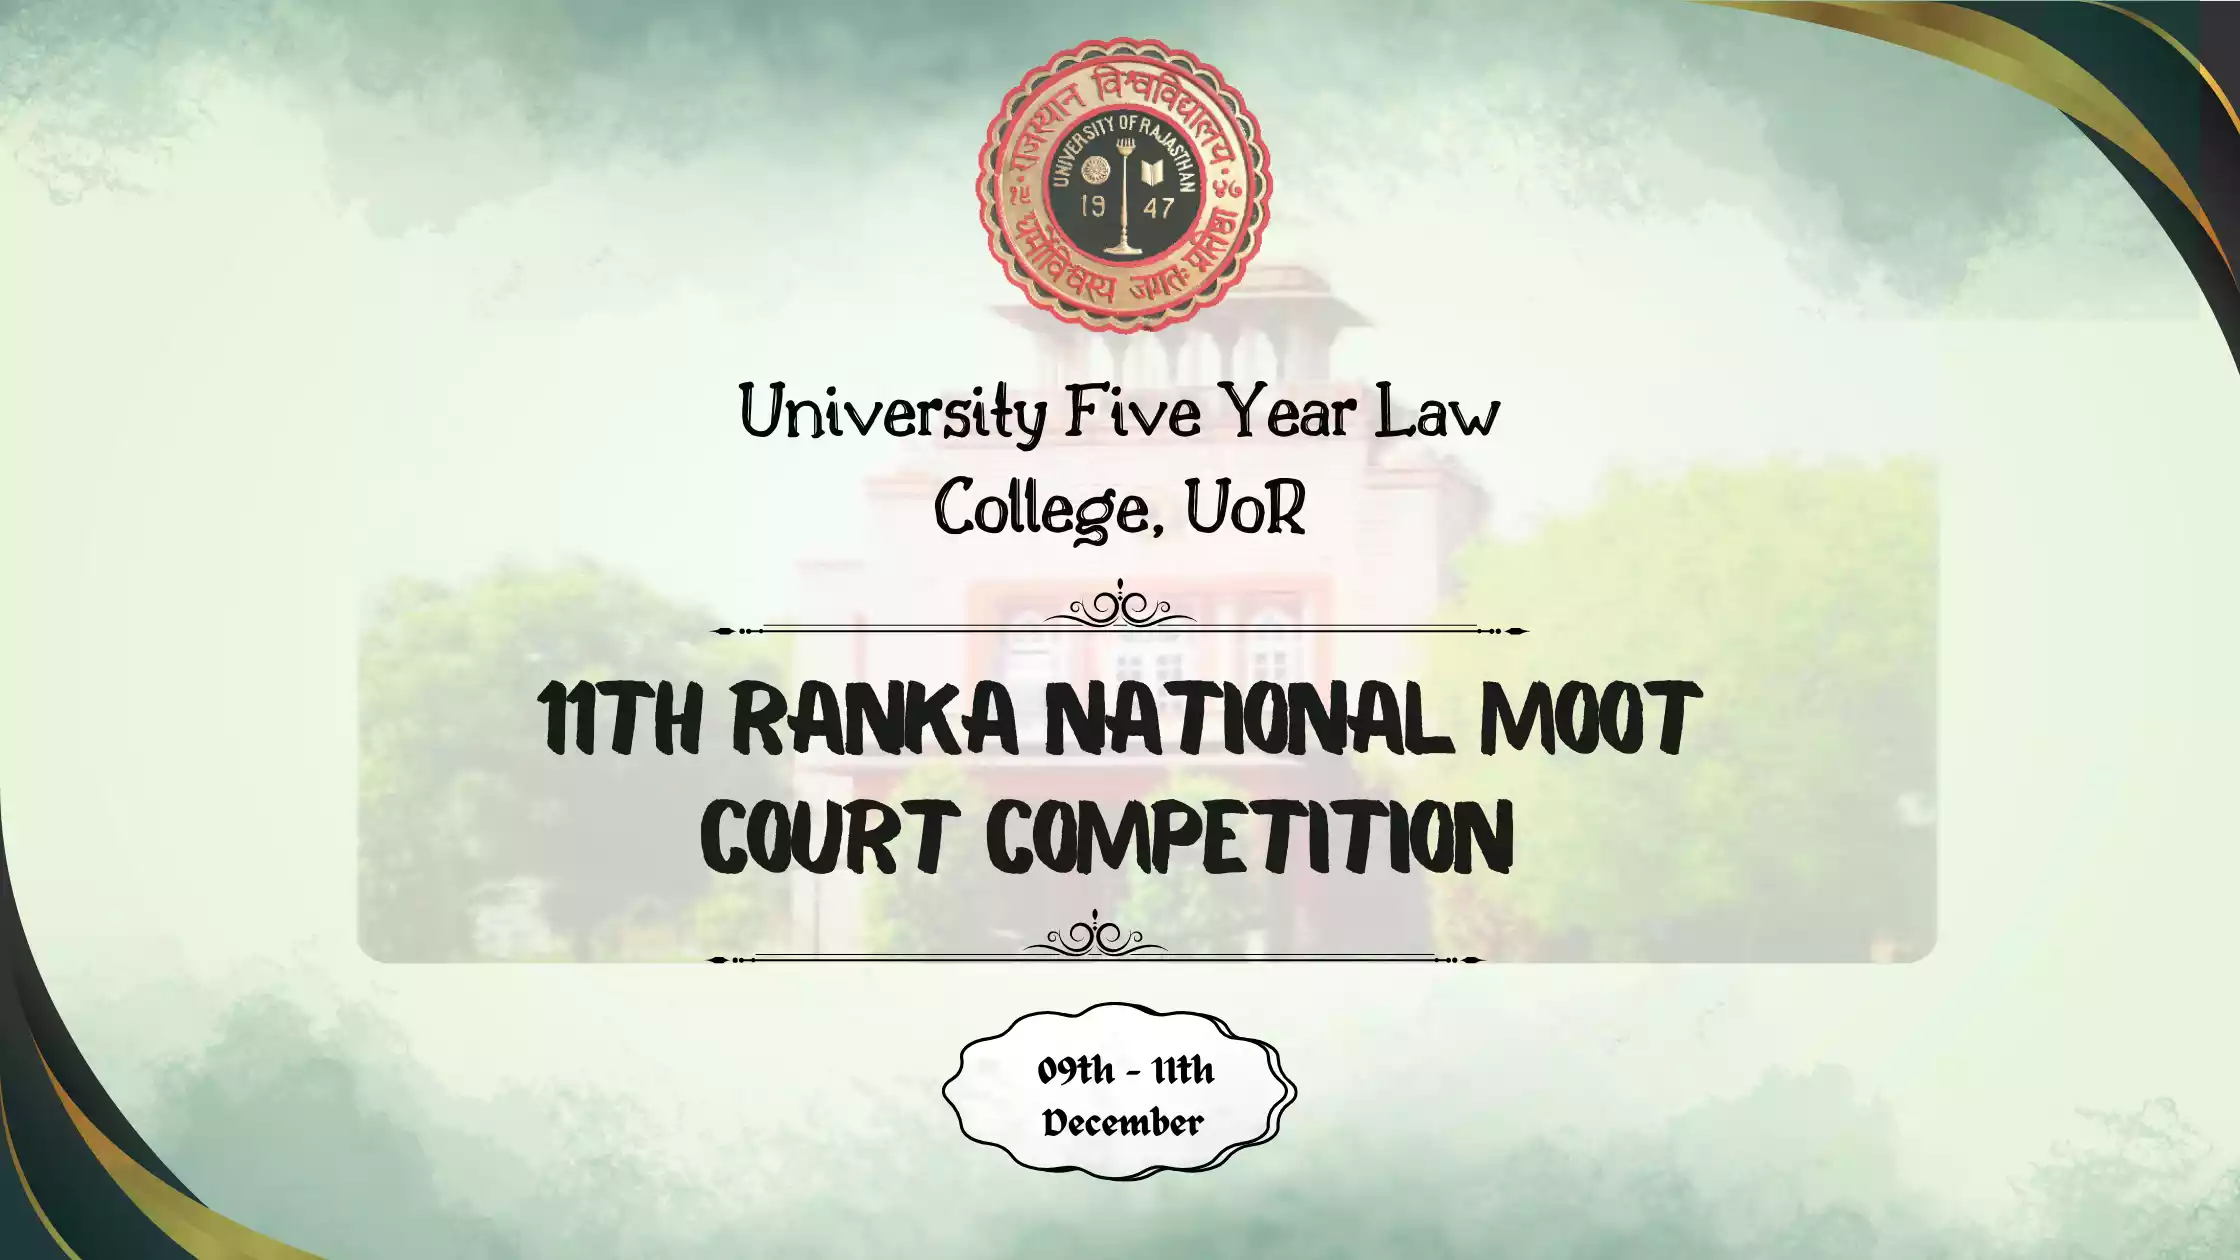 UFYLC-11th-Ranka-National-Moot-Court-Competition